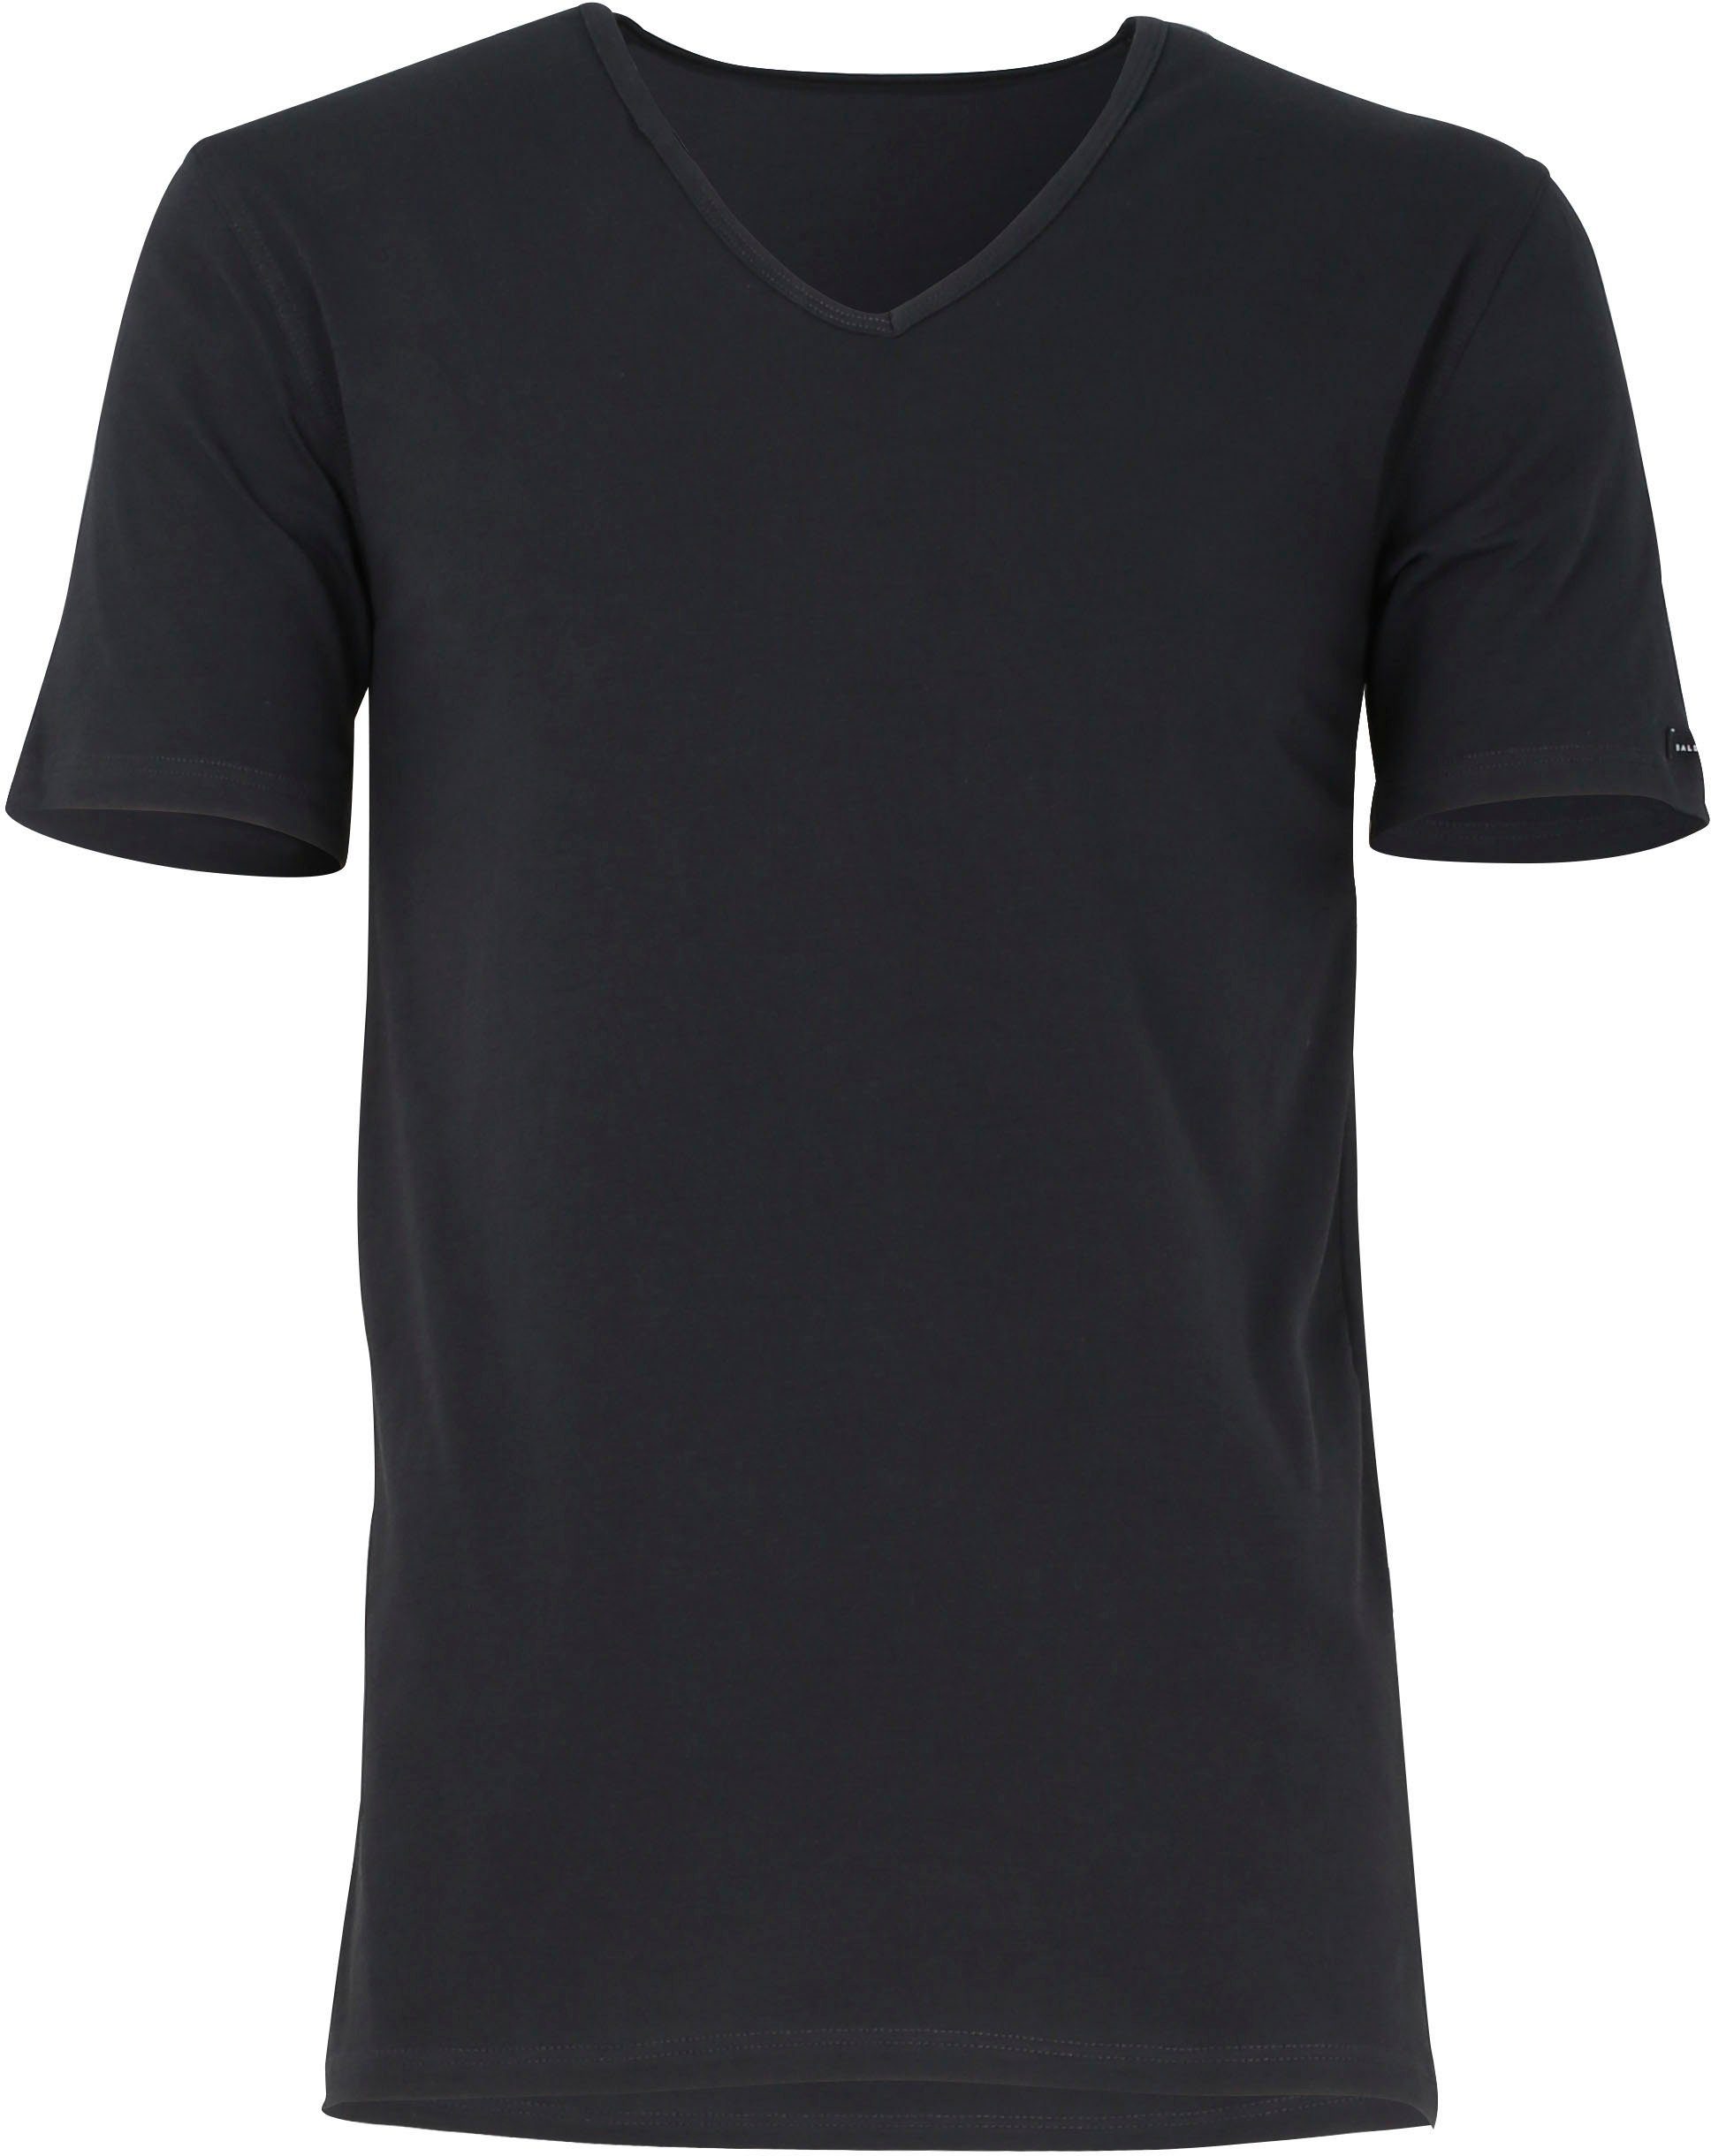 V-Aussc 1/2, BALDESSARINI schwarz-dunkel-uni Unterhemd Shirt,